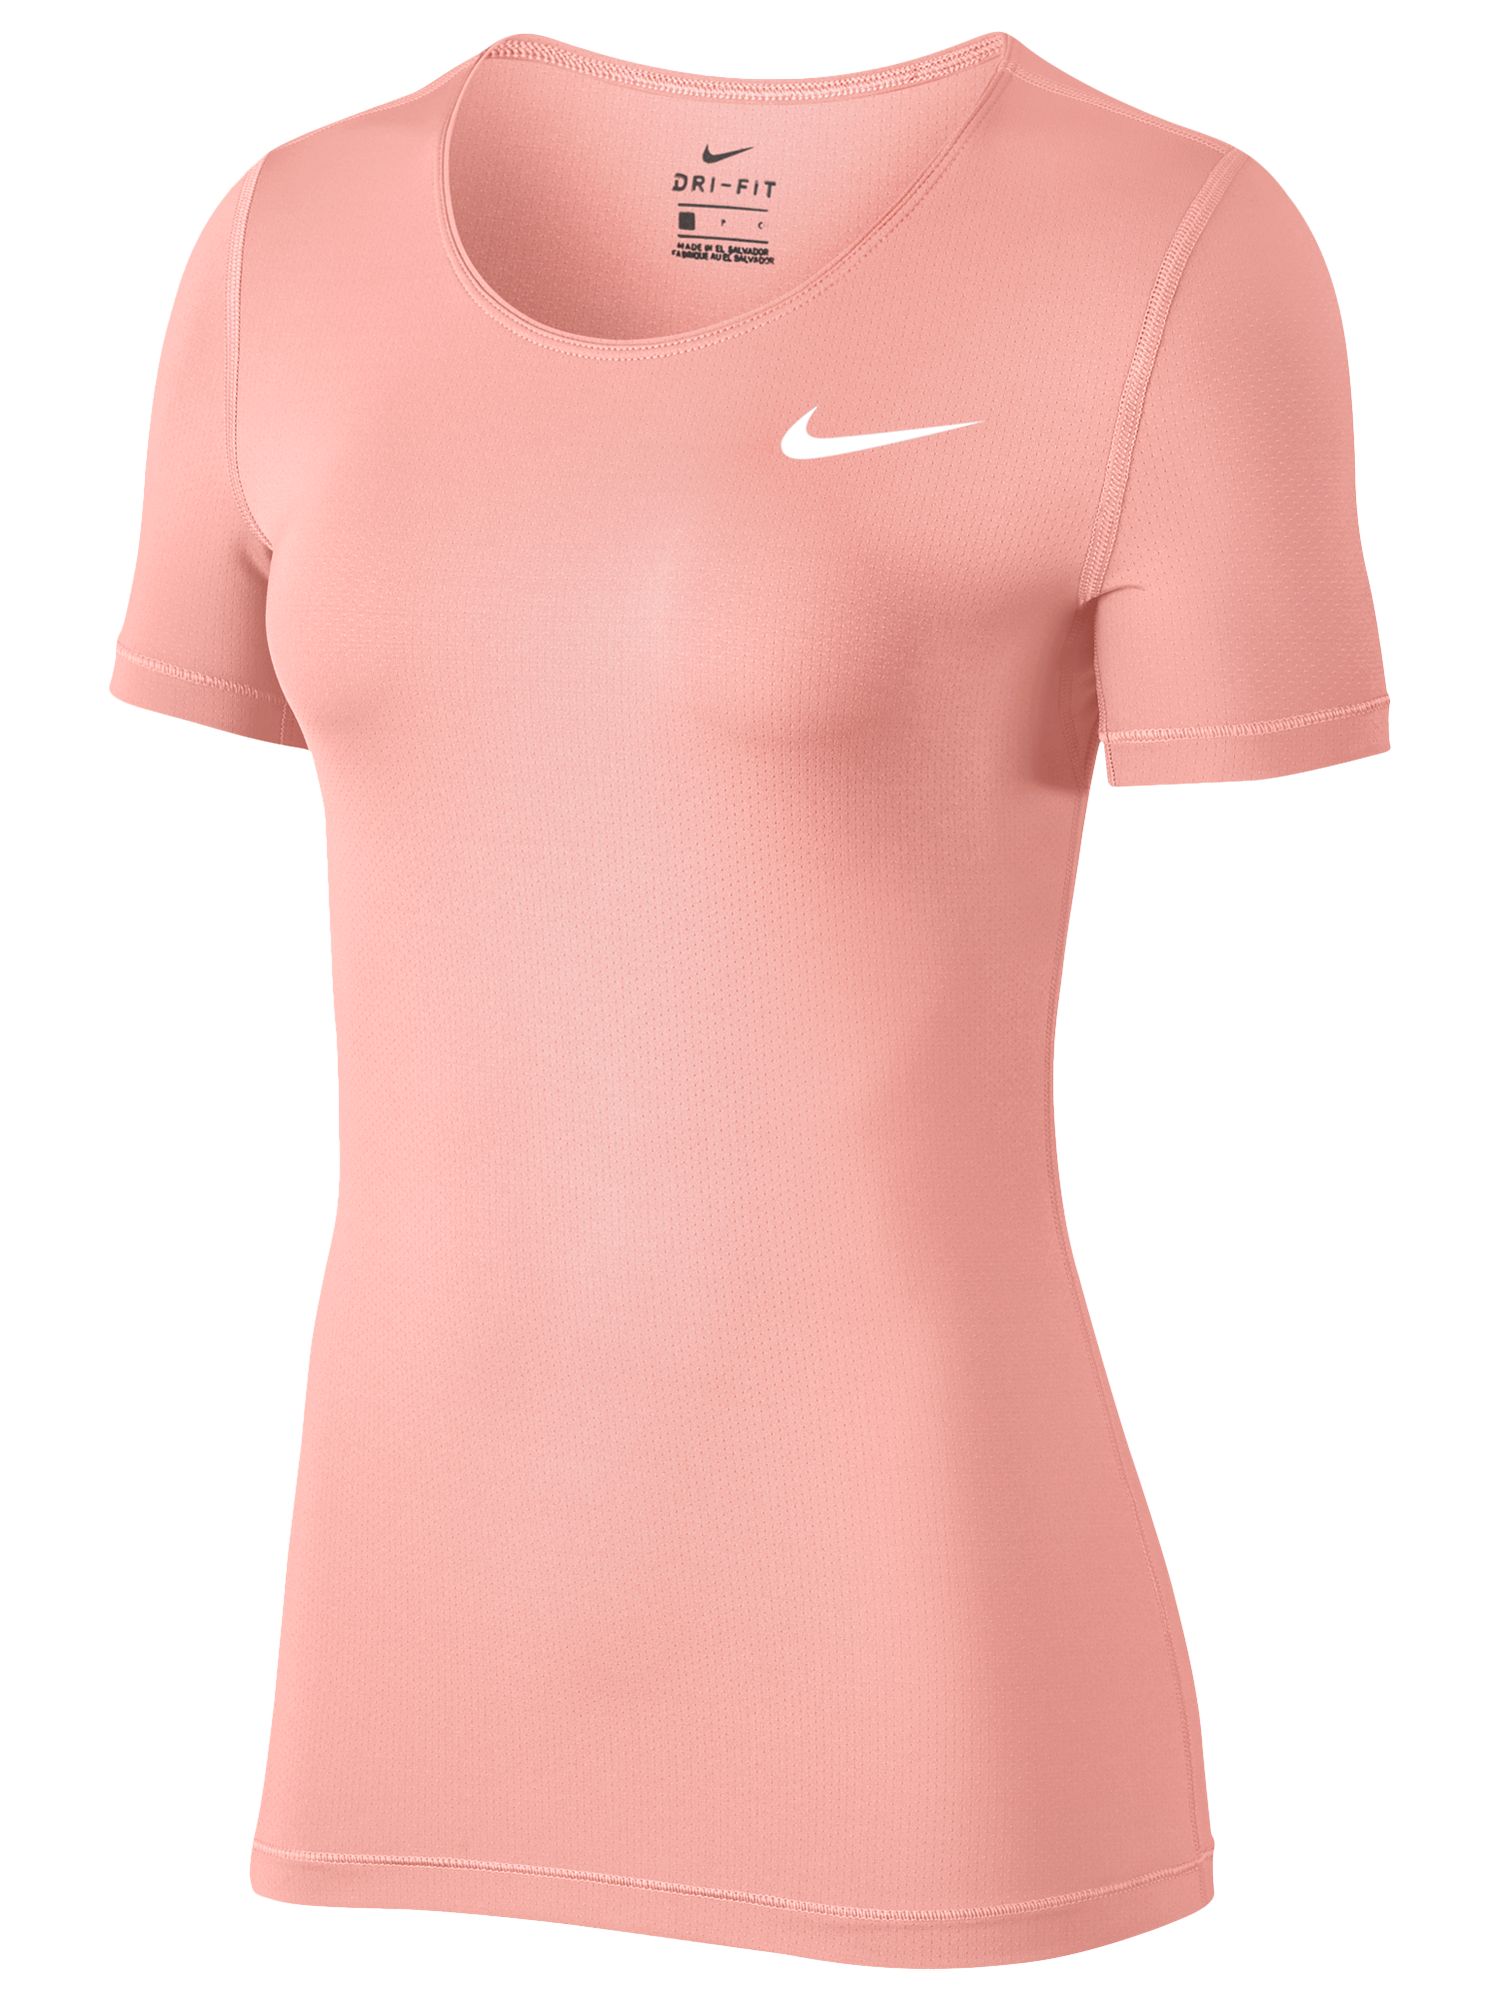 Nike Allover Mesh Short Sleeve Training Top, Storm Pink/White